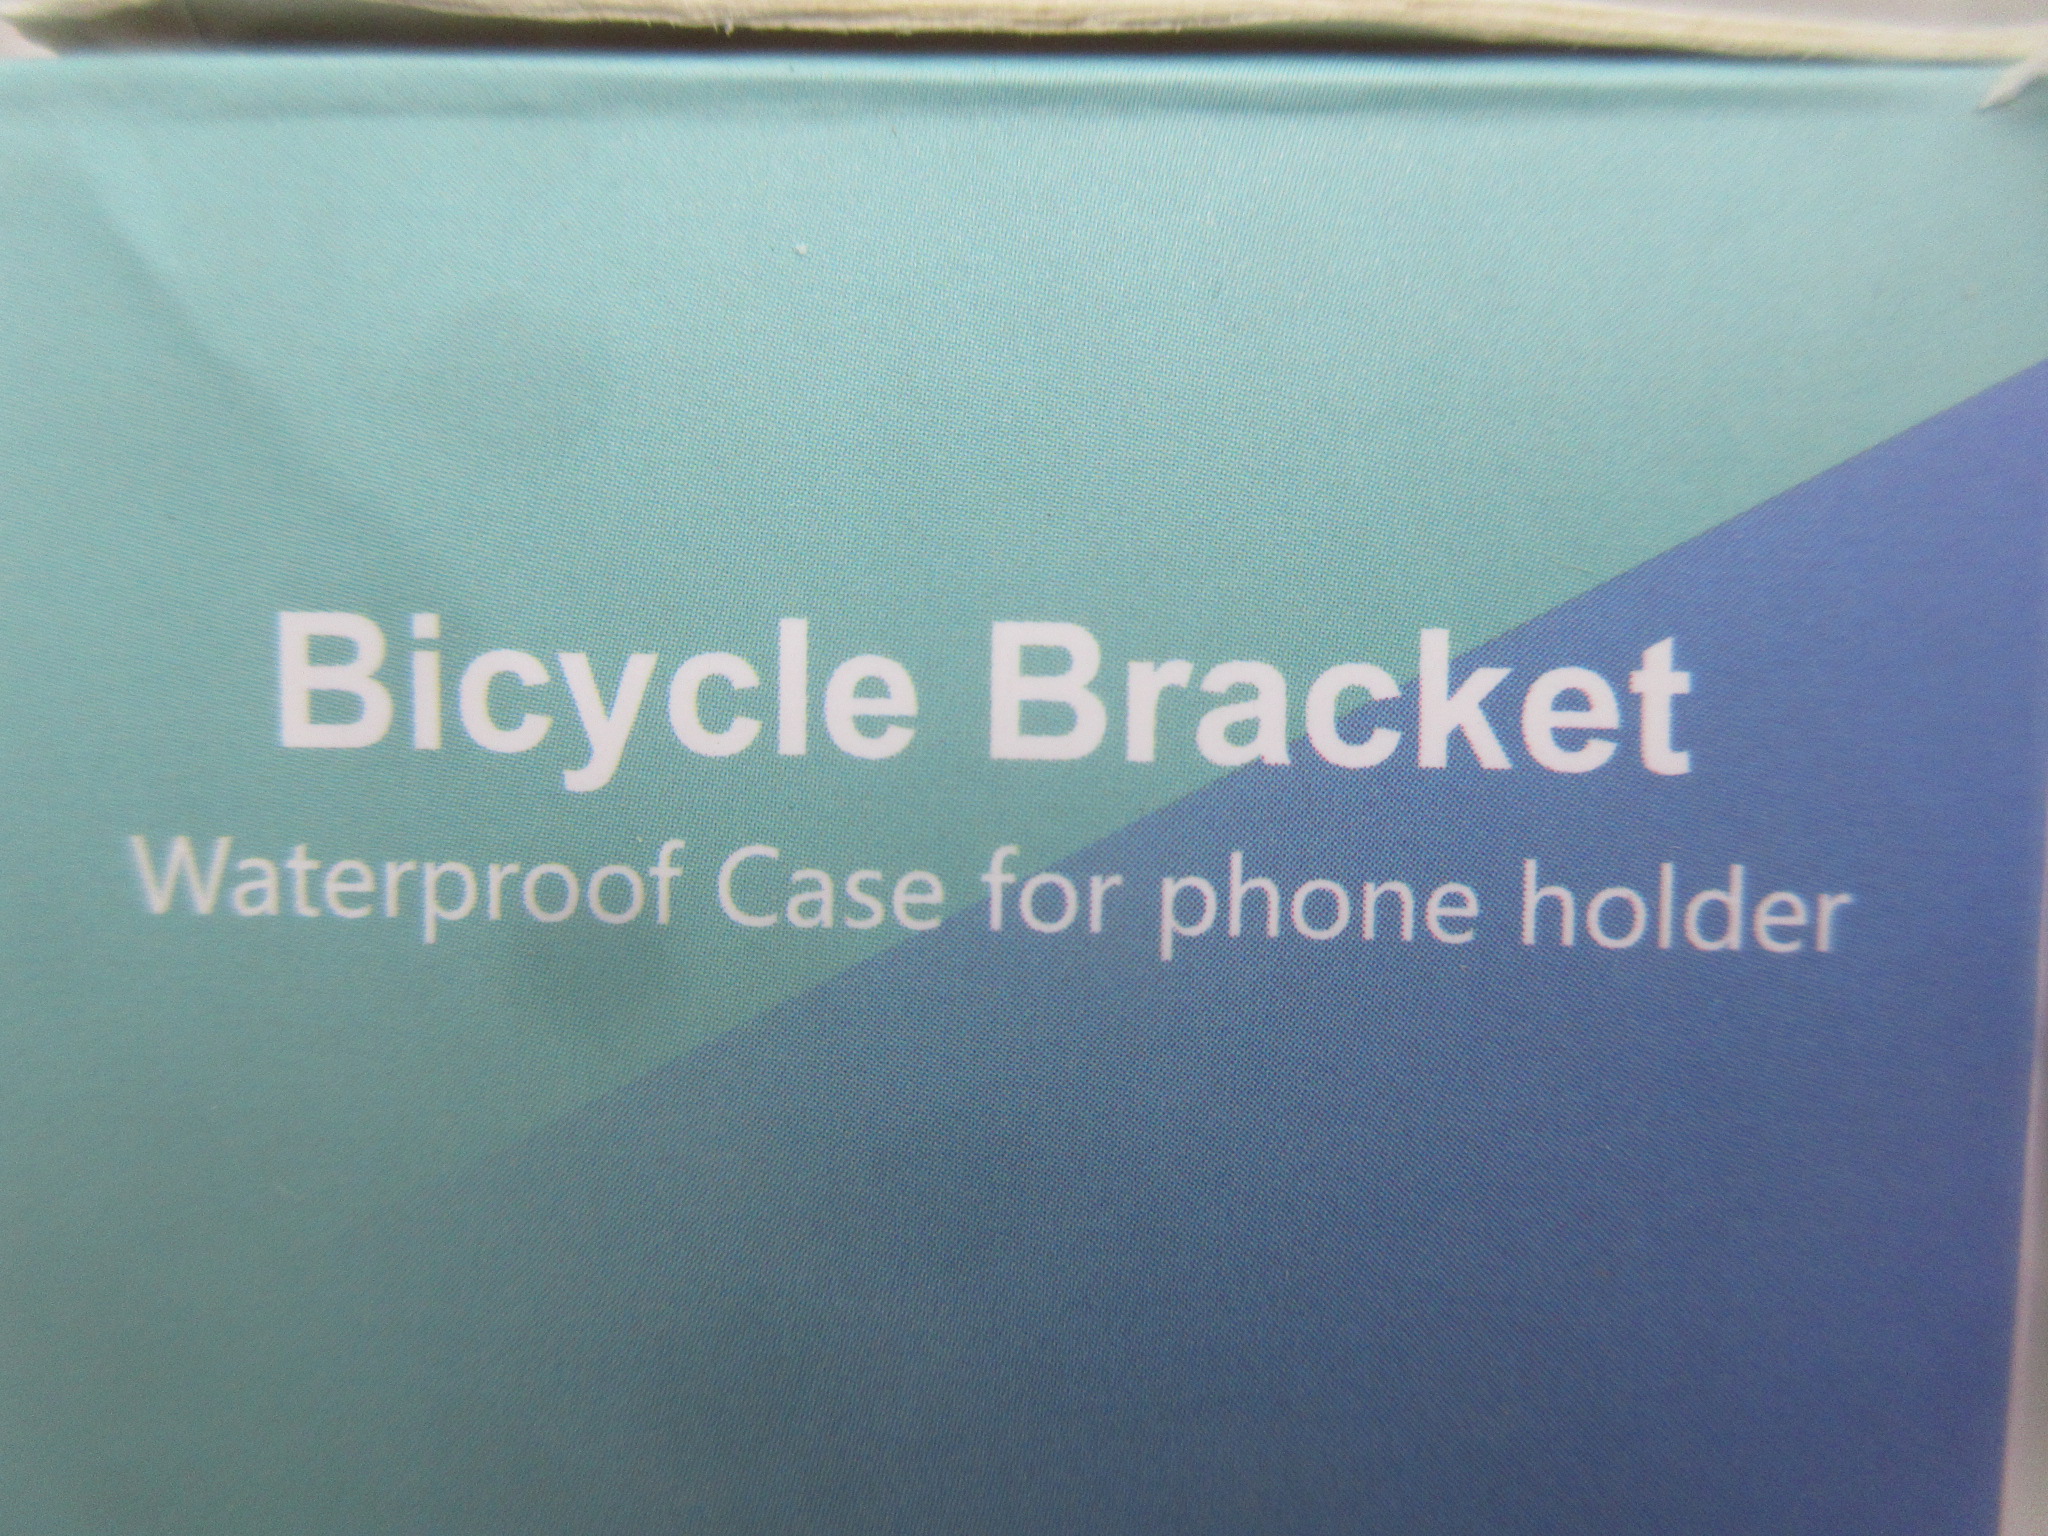 Bicycle Bracket Waterproof Case for phone holder